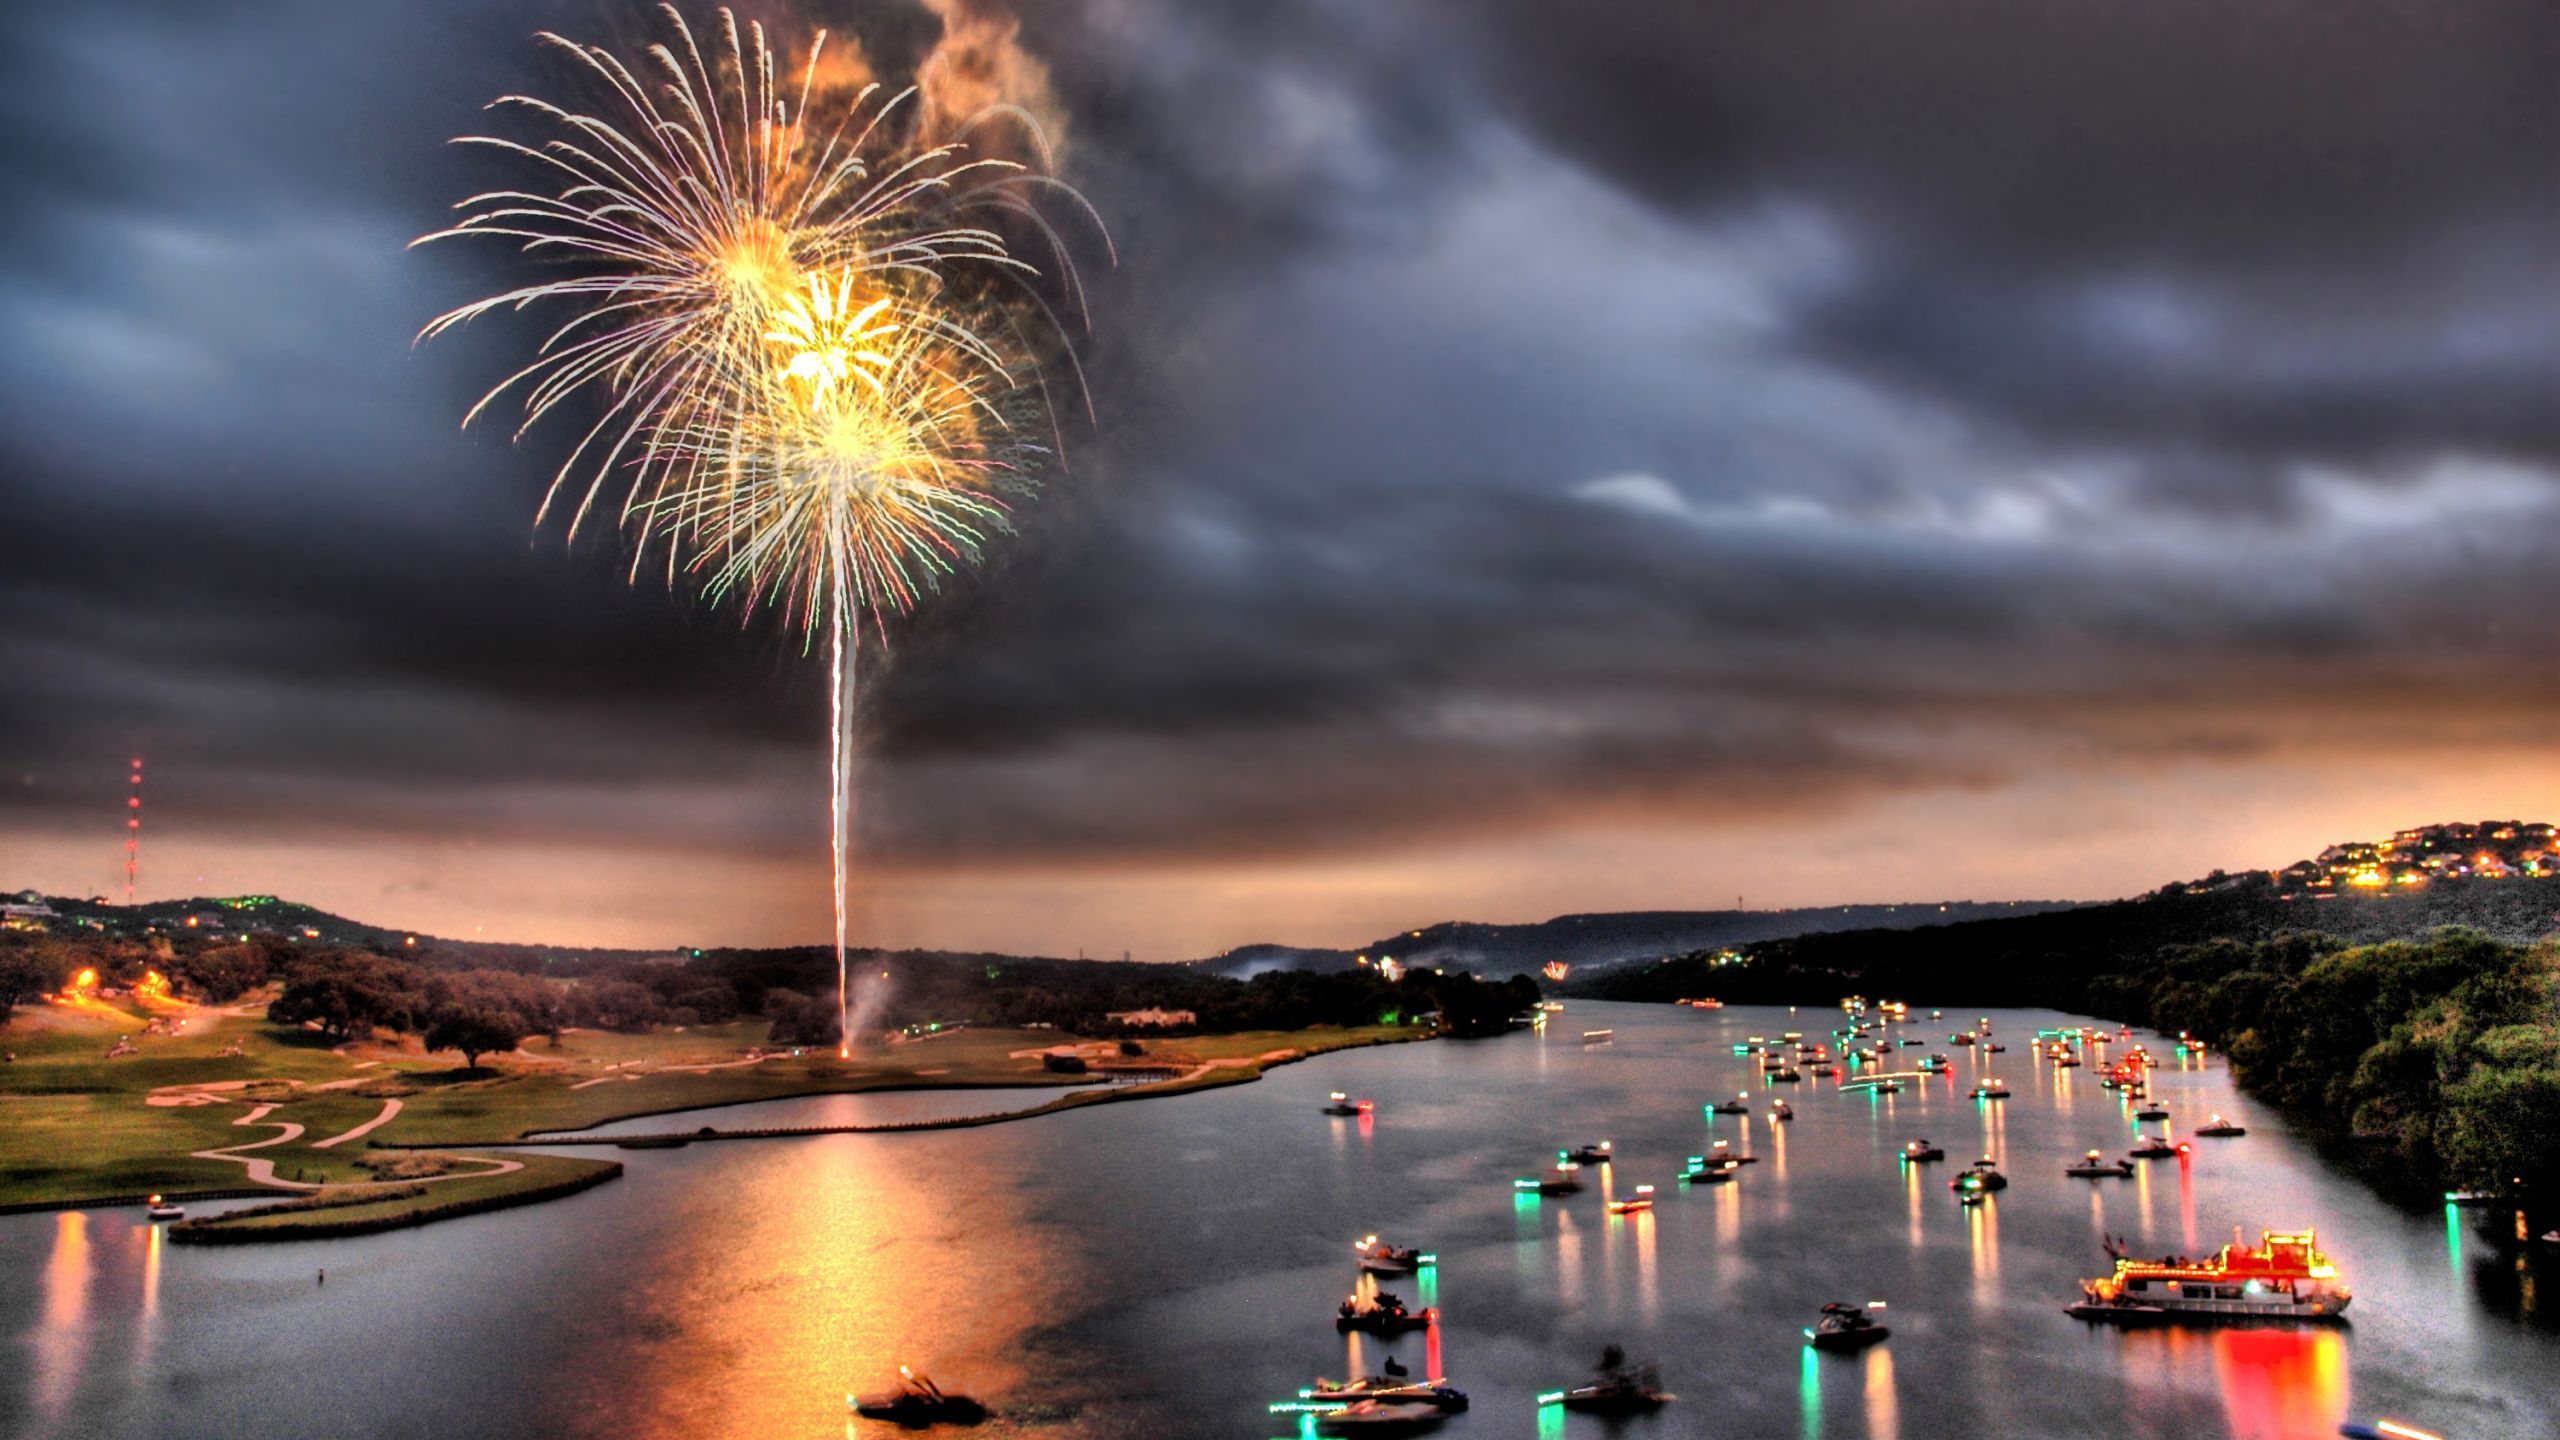 Free download July 4 fireworks over lake Austin Texas Wallpaper